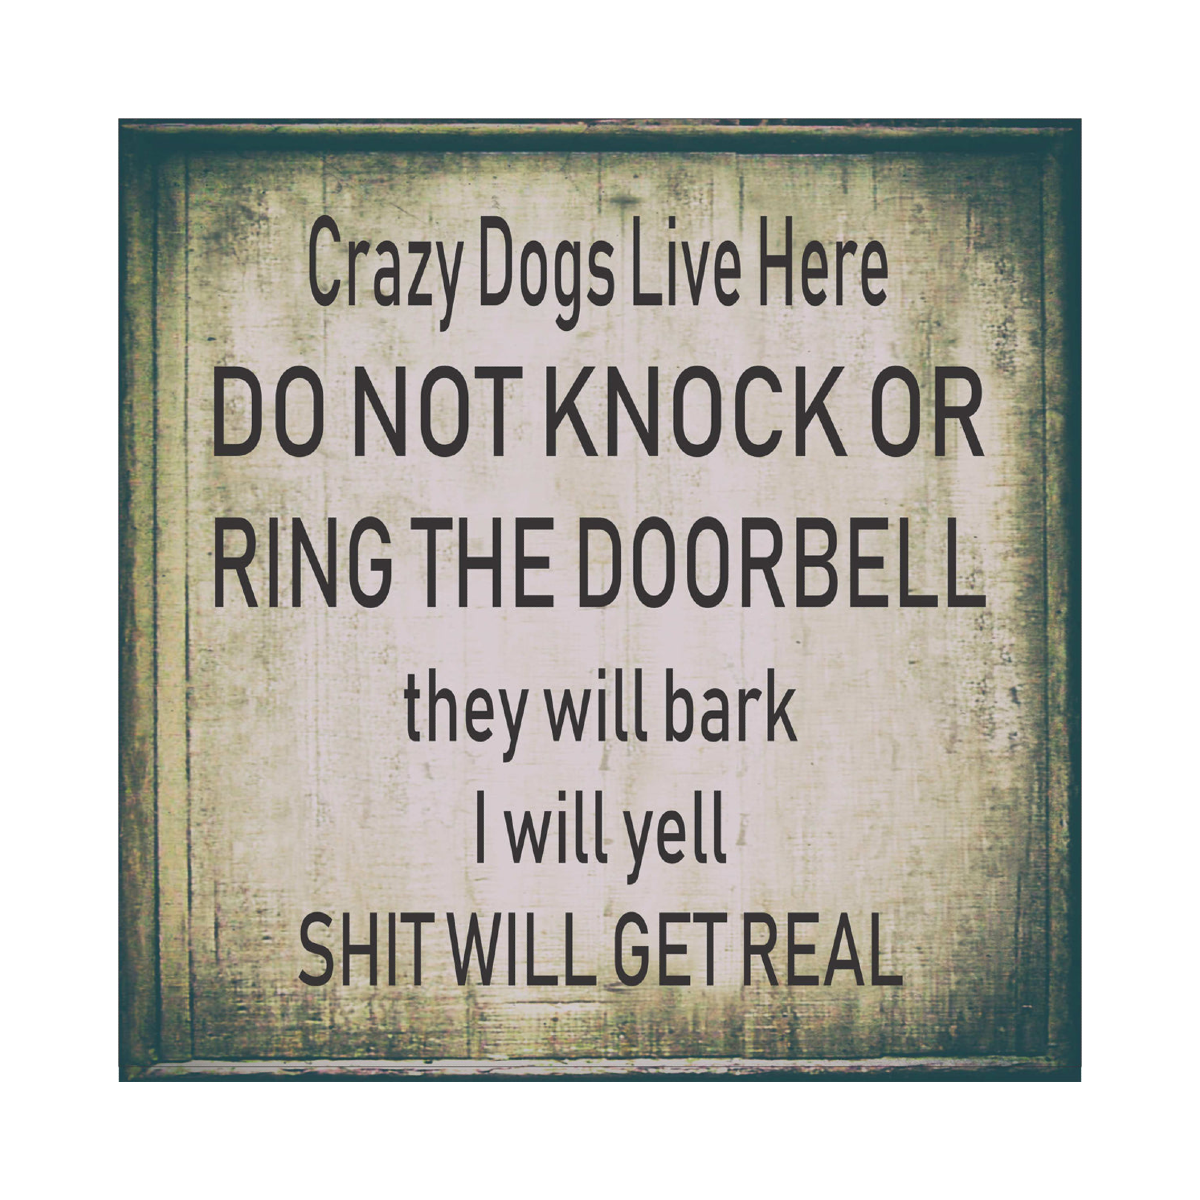 Crazy Dogs Live Here Stencil or A Crazy Dog Lives Here Stencil - Superior Stencils